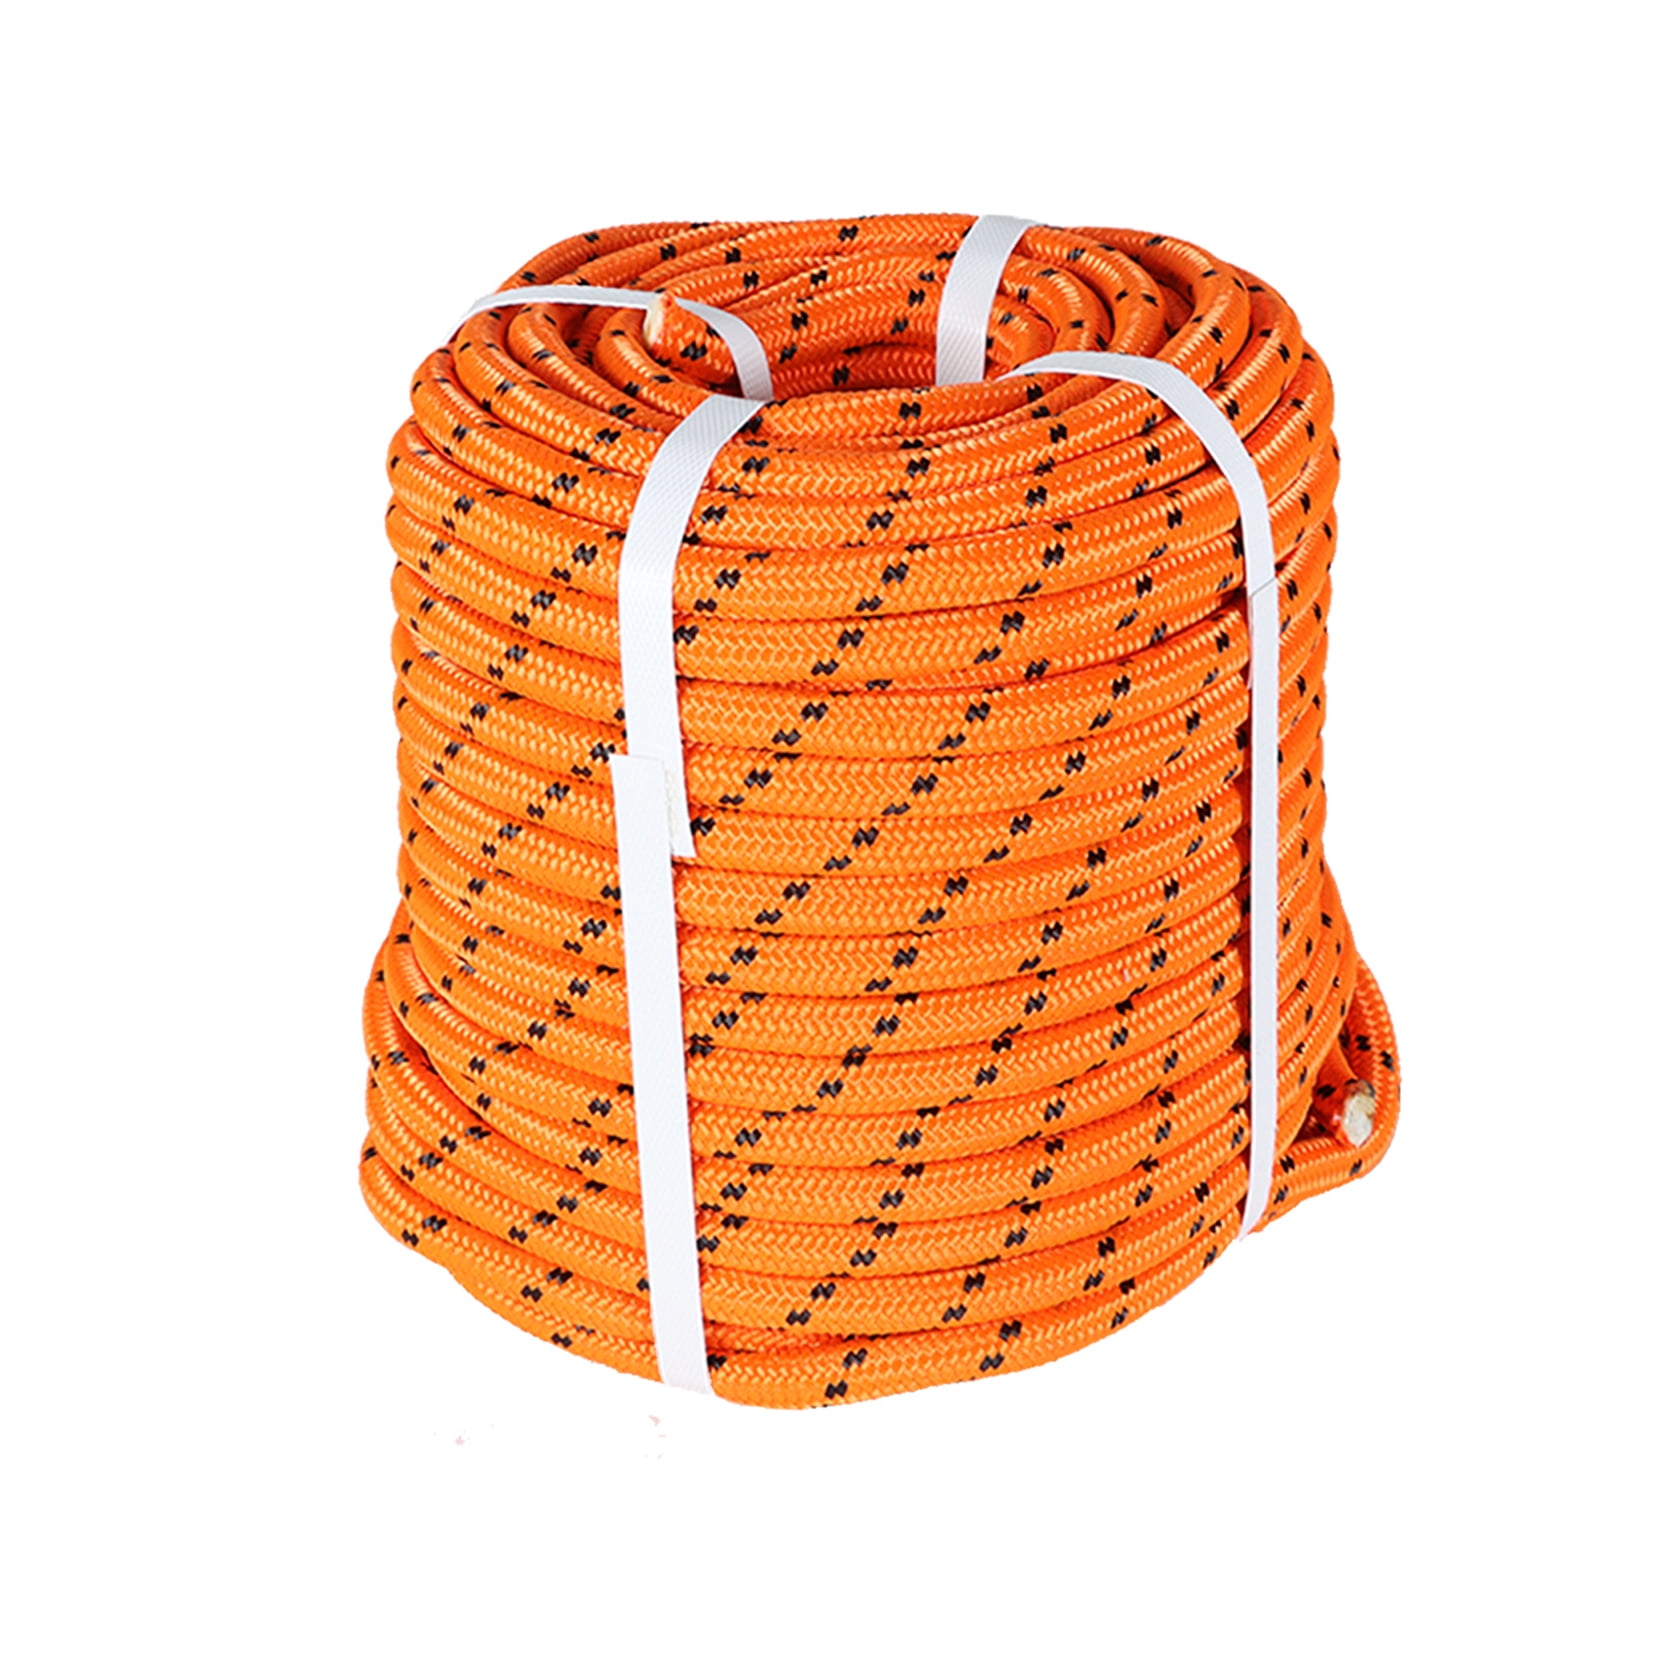 Polyester Rope Core, Polyethylene Tied Rope, Nylon Kernmantle Rope